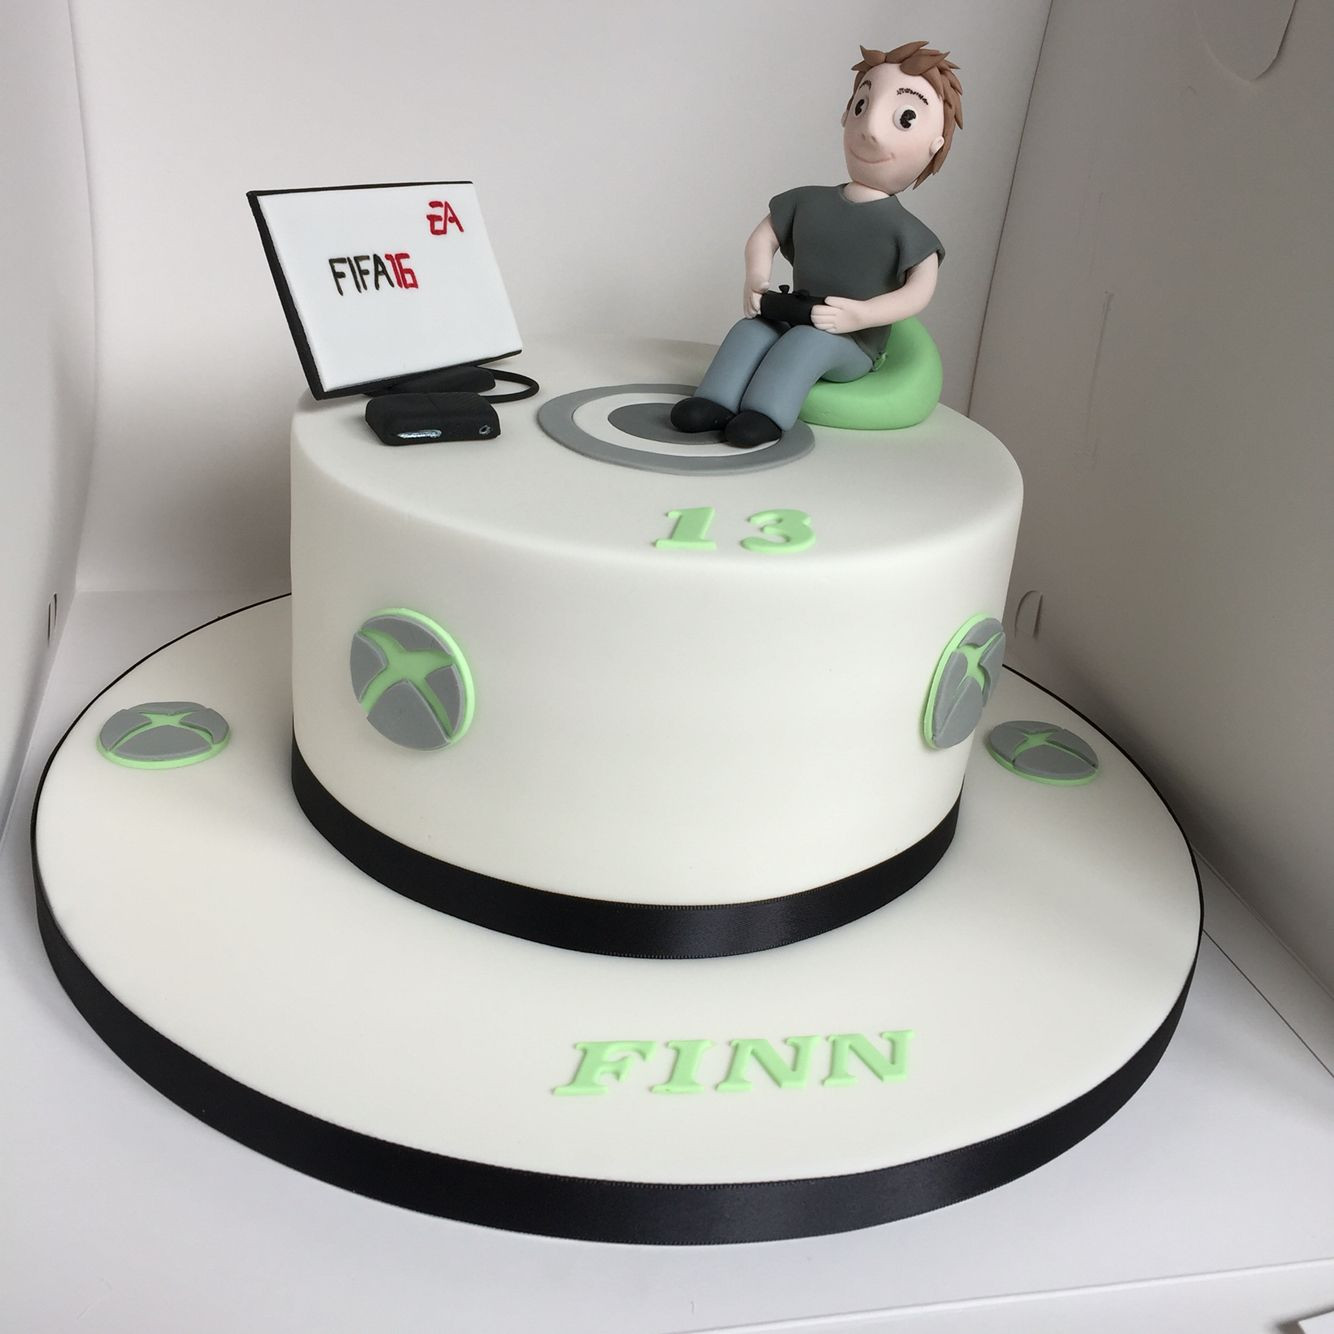 Xbox Birthday Cake
 Xbox fifa16 birthday cake for a teenager